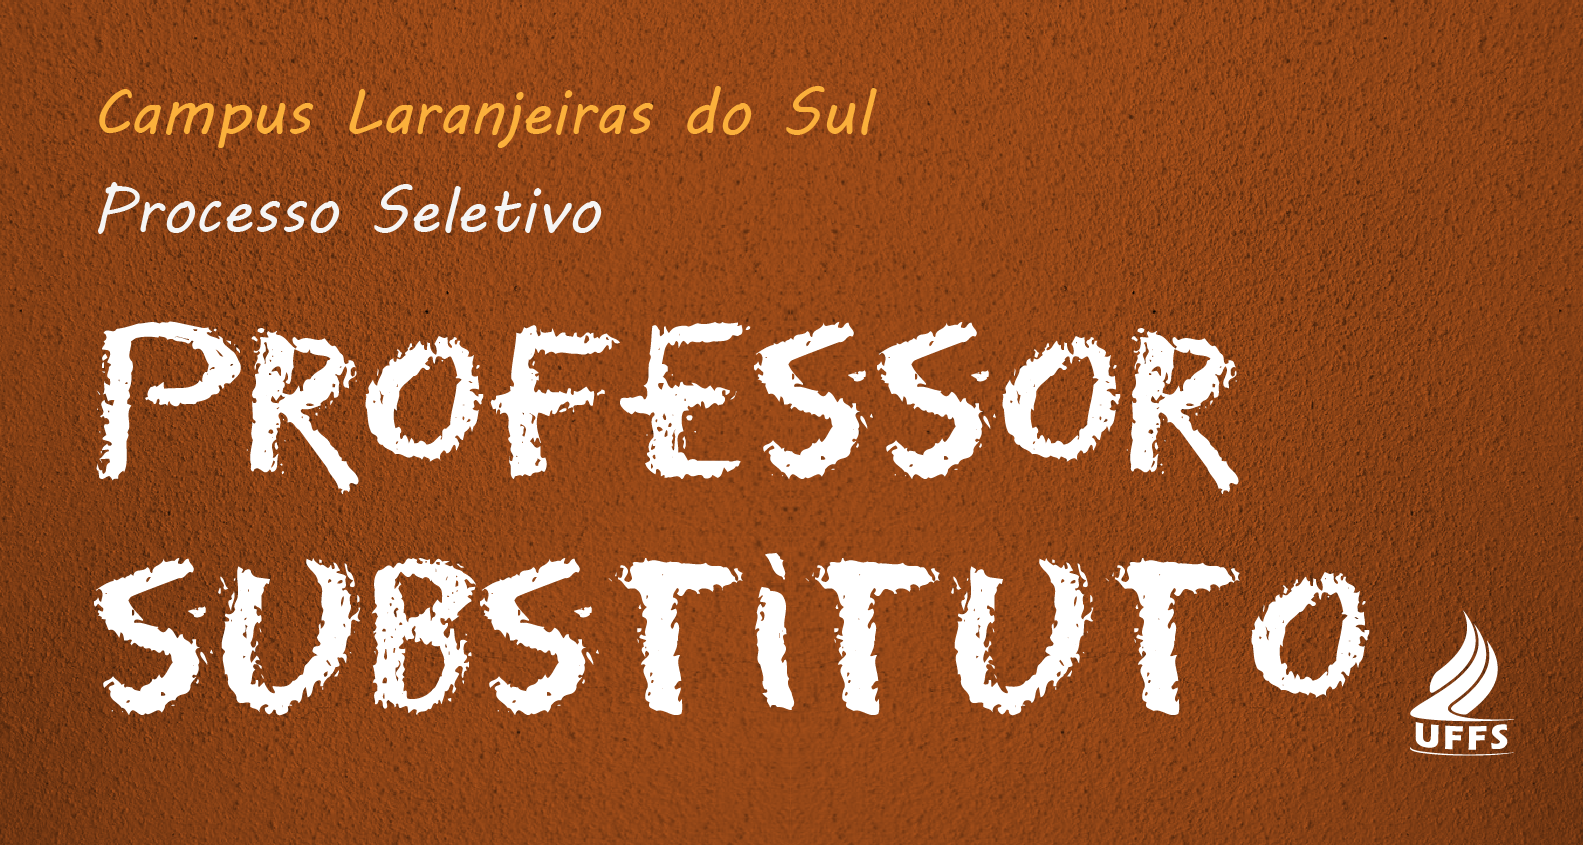 31-08-2016 - Professor substituto.jpg